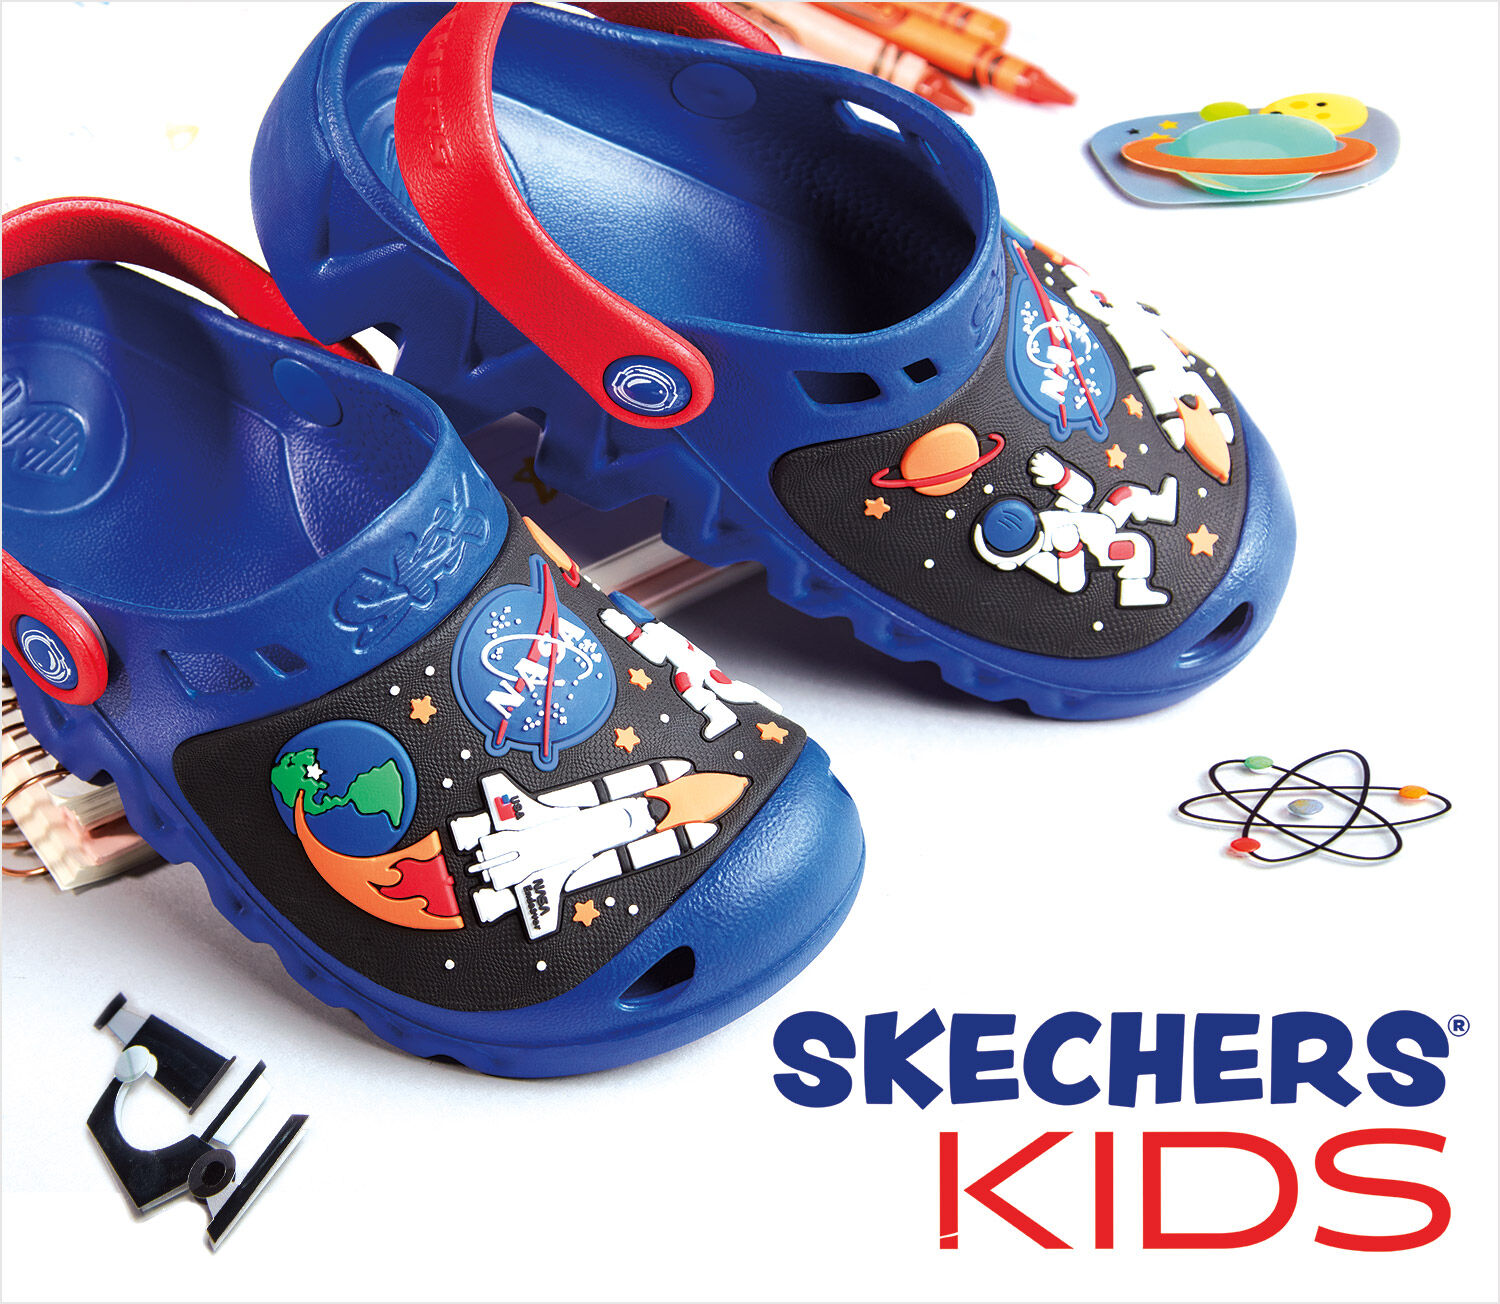 skechers baby boy shoes